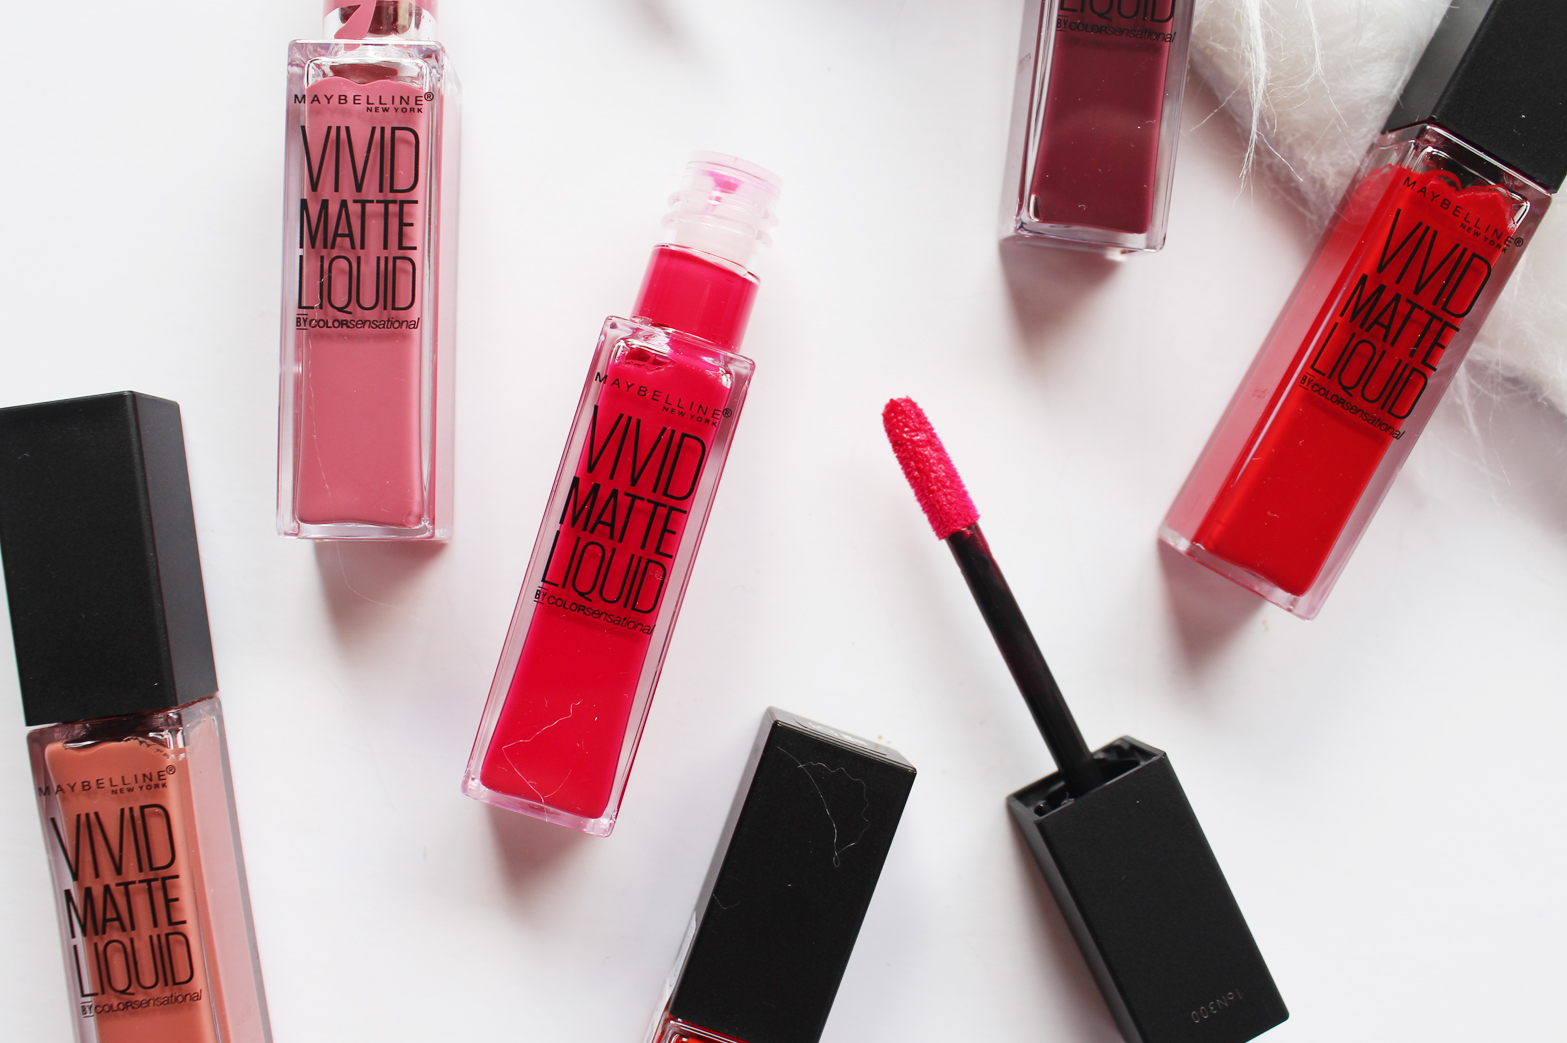 MAYBELLINE | Color Sensational Vivid Liquid Matte Lipsticks - Review + Swatches - CassandraMyee